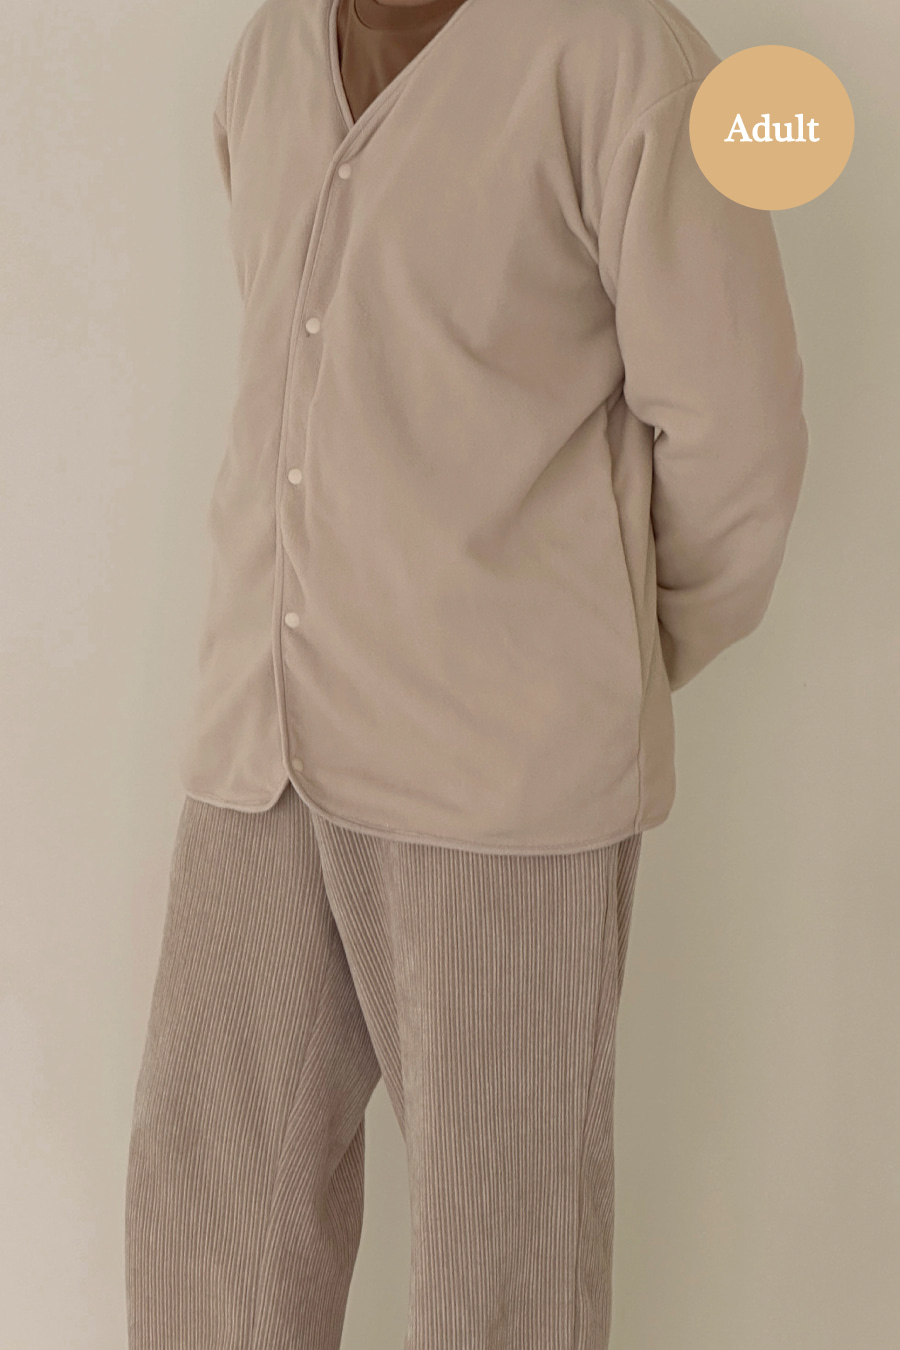 (Adult) Fleece cardigan